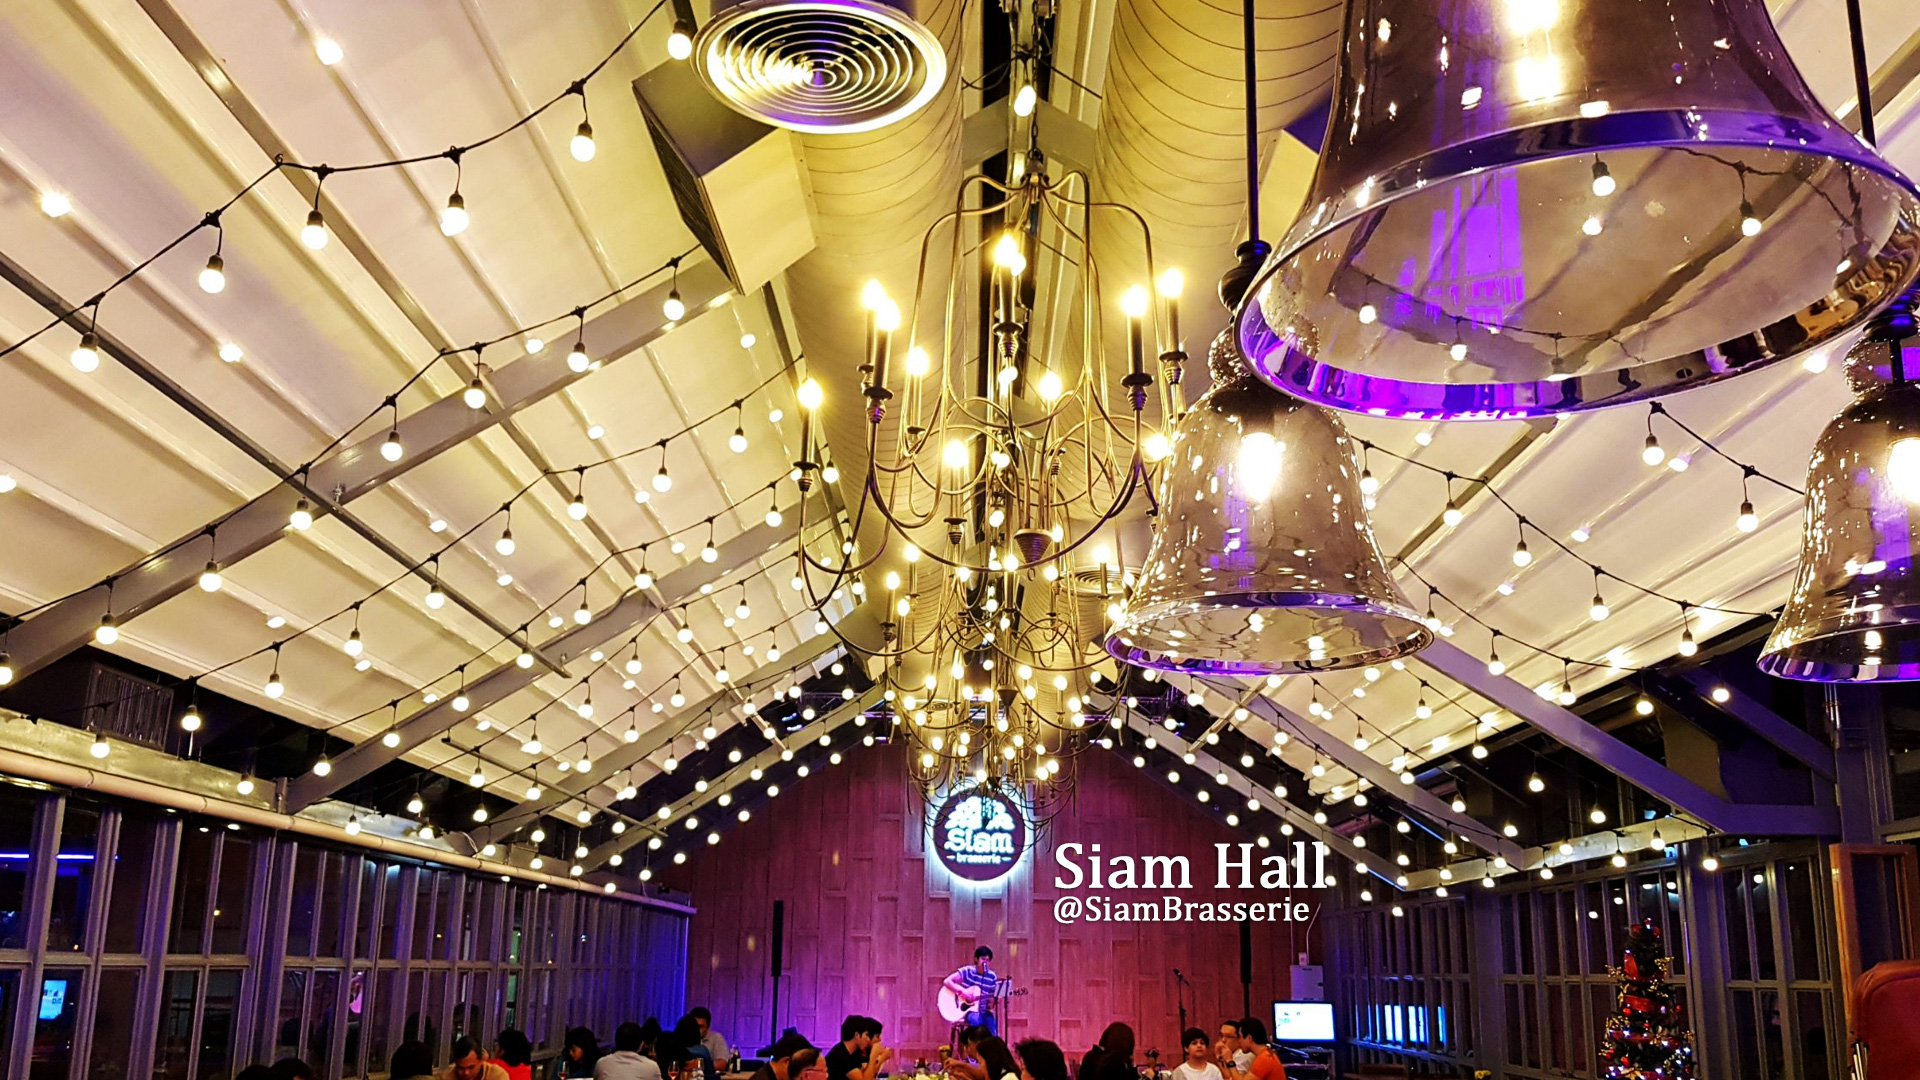 Siam Hall @ Siam Brasserie